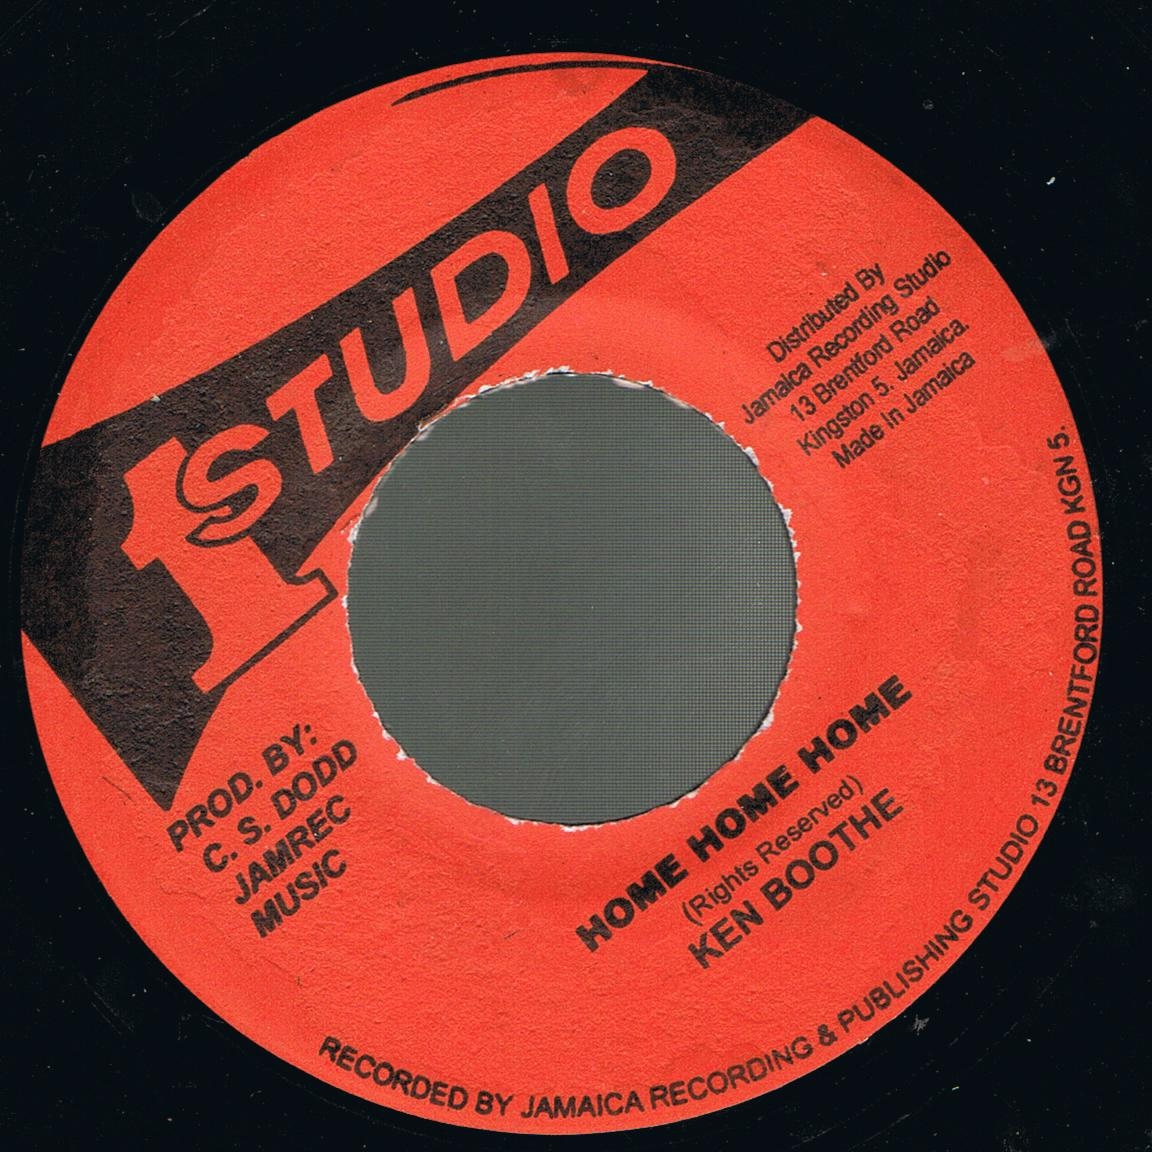 Ken Boothe - Home Home Home / The Soul Brothers - Wendell (Original Stamper 7")